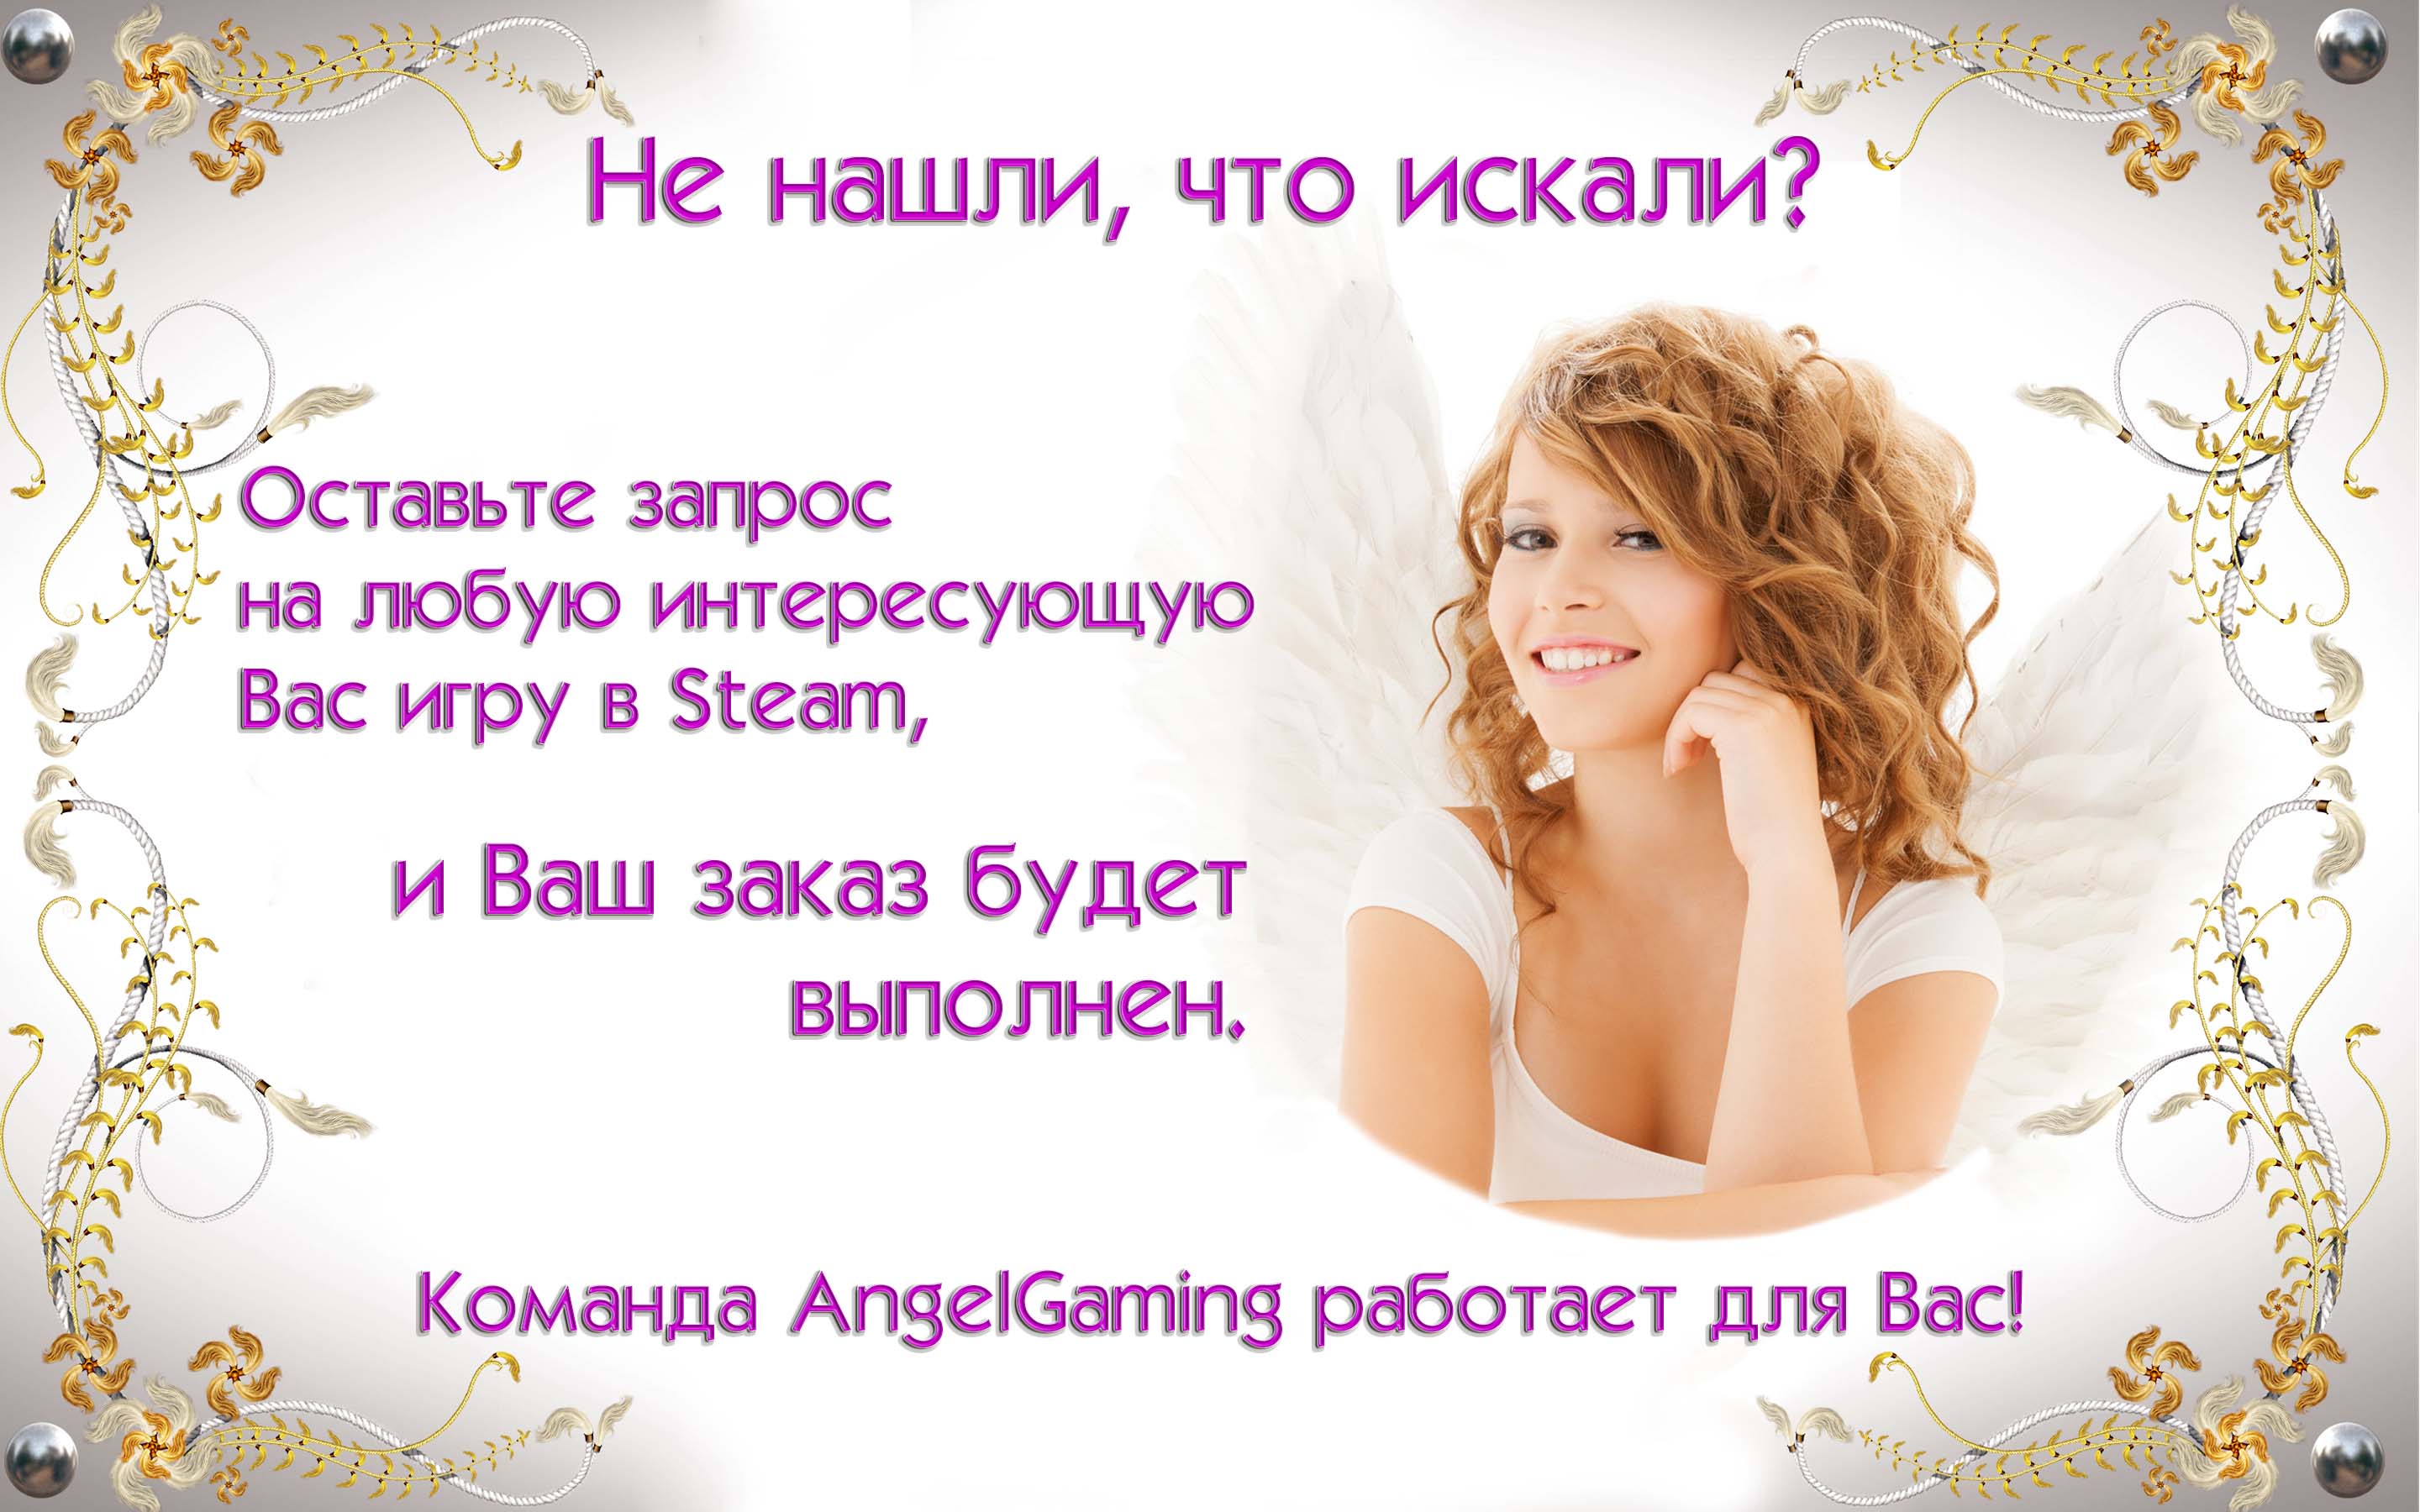 Undertale |Steam Gift| RUSSIA